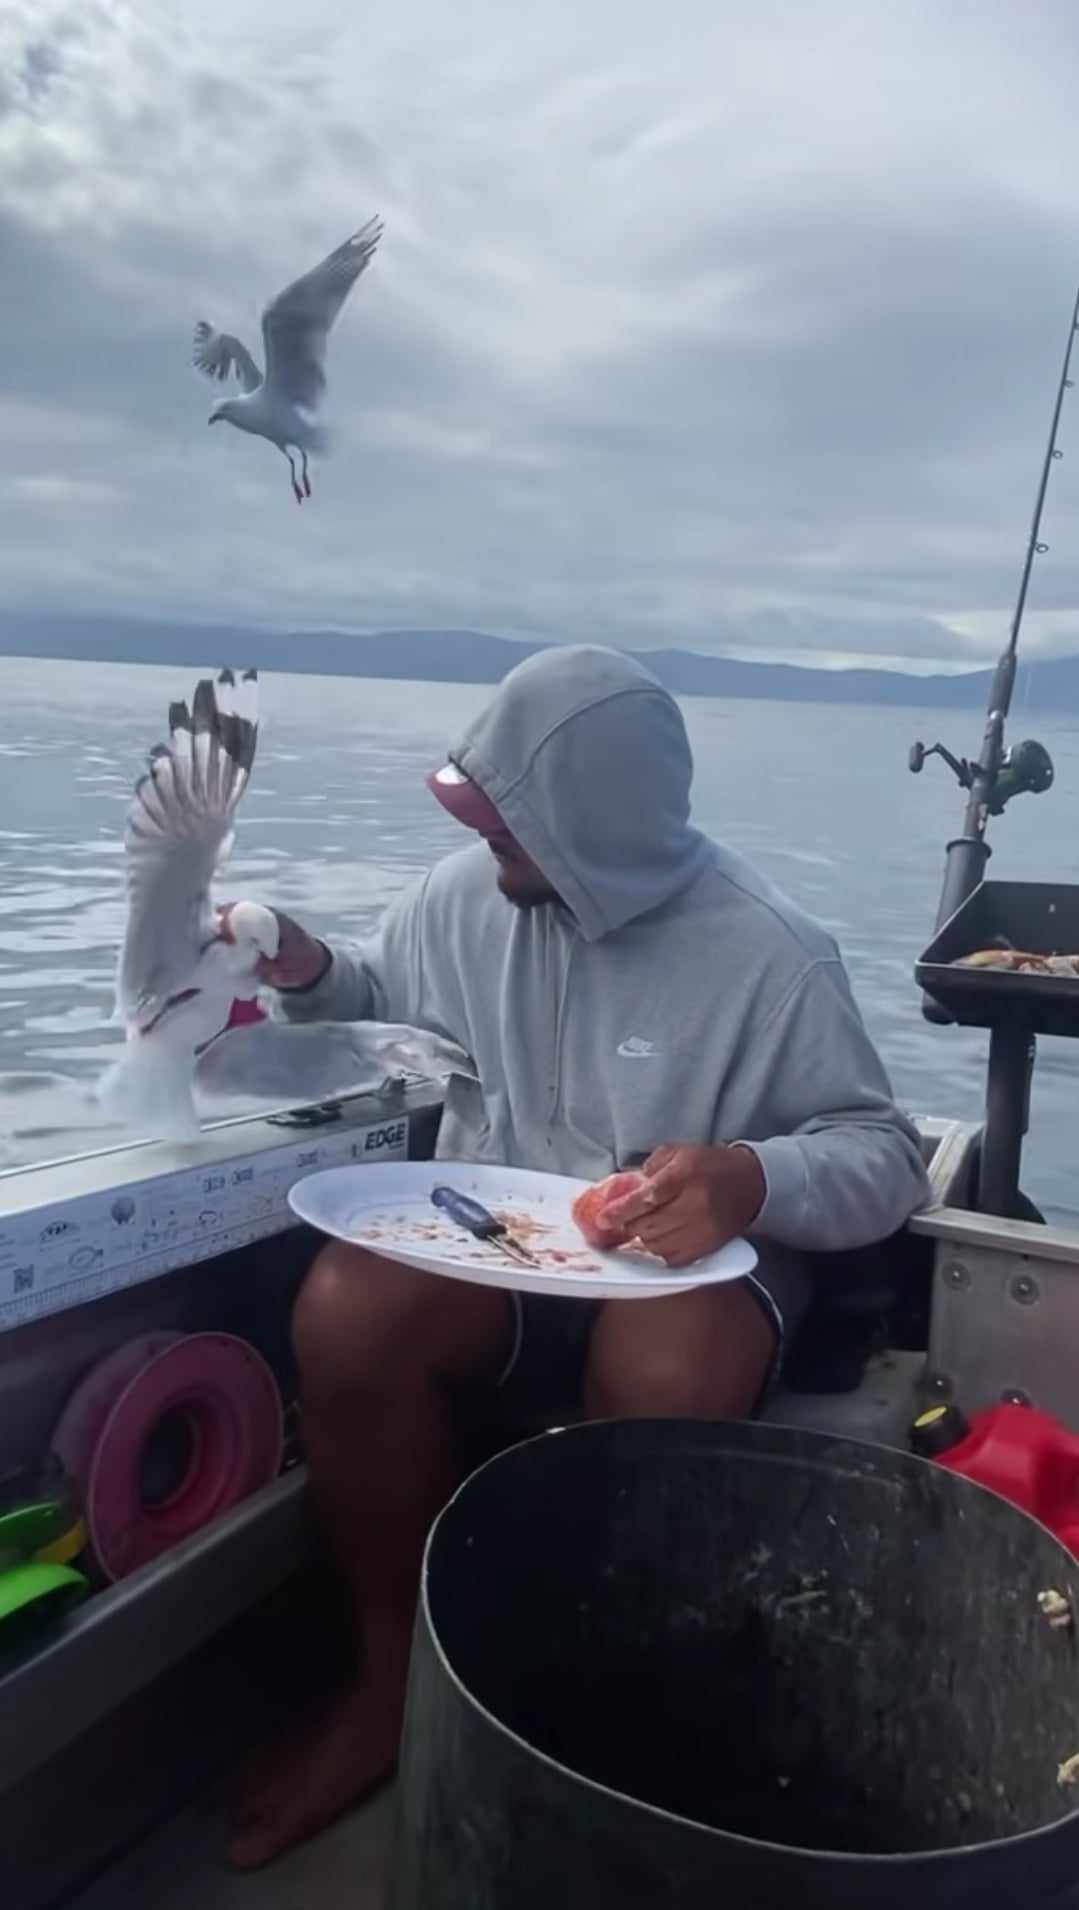 TikTok video of man holding seagull by neck, threatening to break it  prompts complaint - NZ Herald